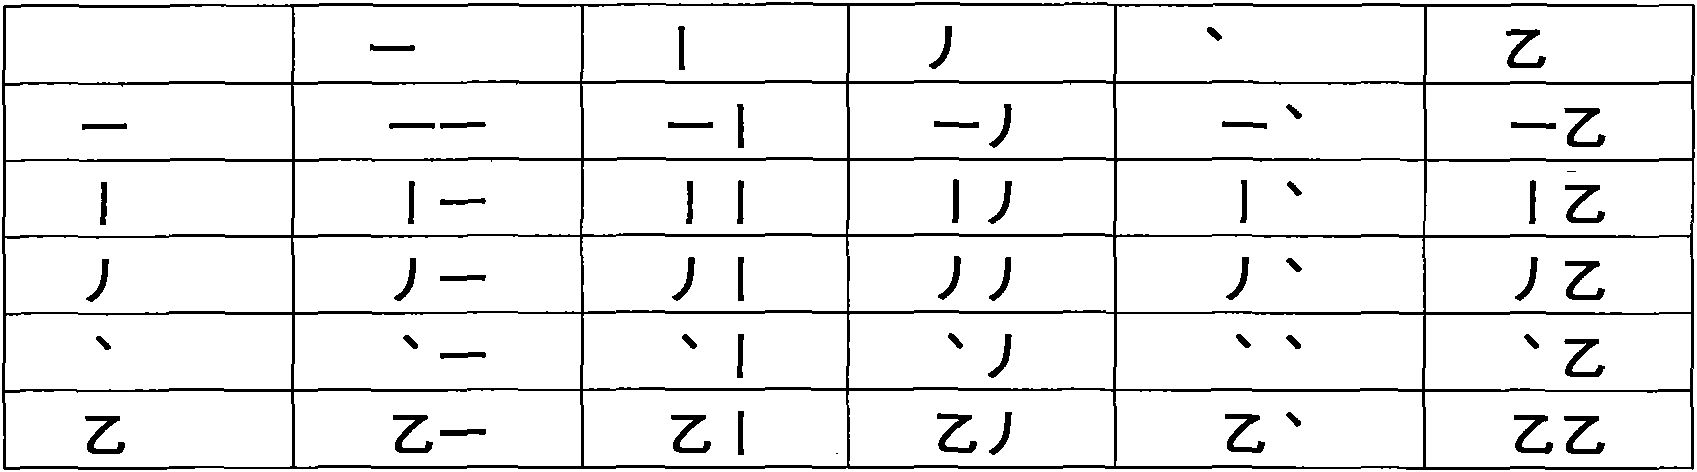 Twenty-five-radical Chinese-form code input method